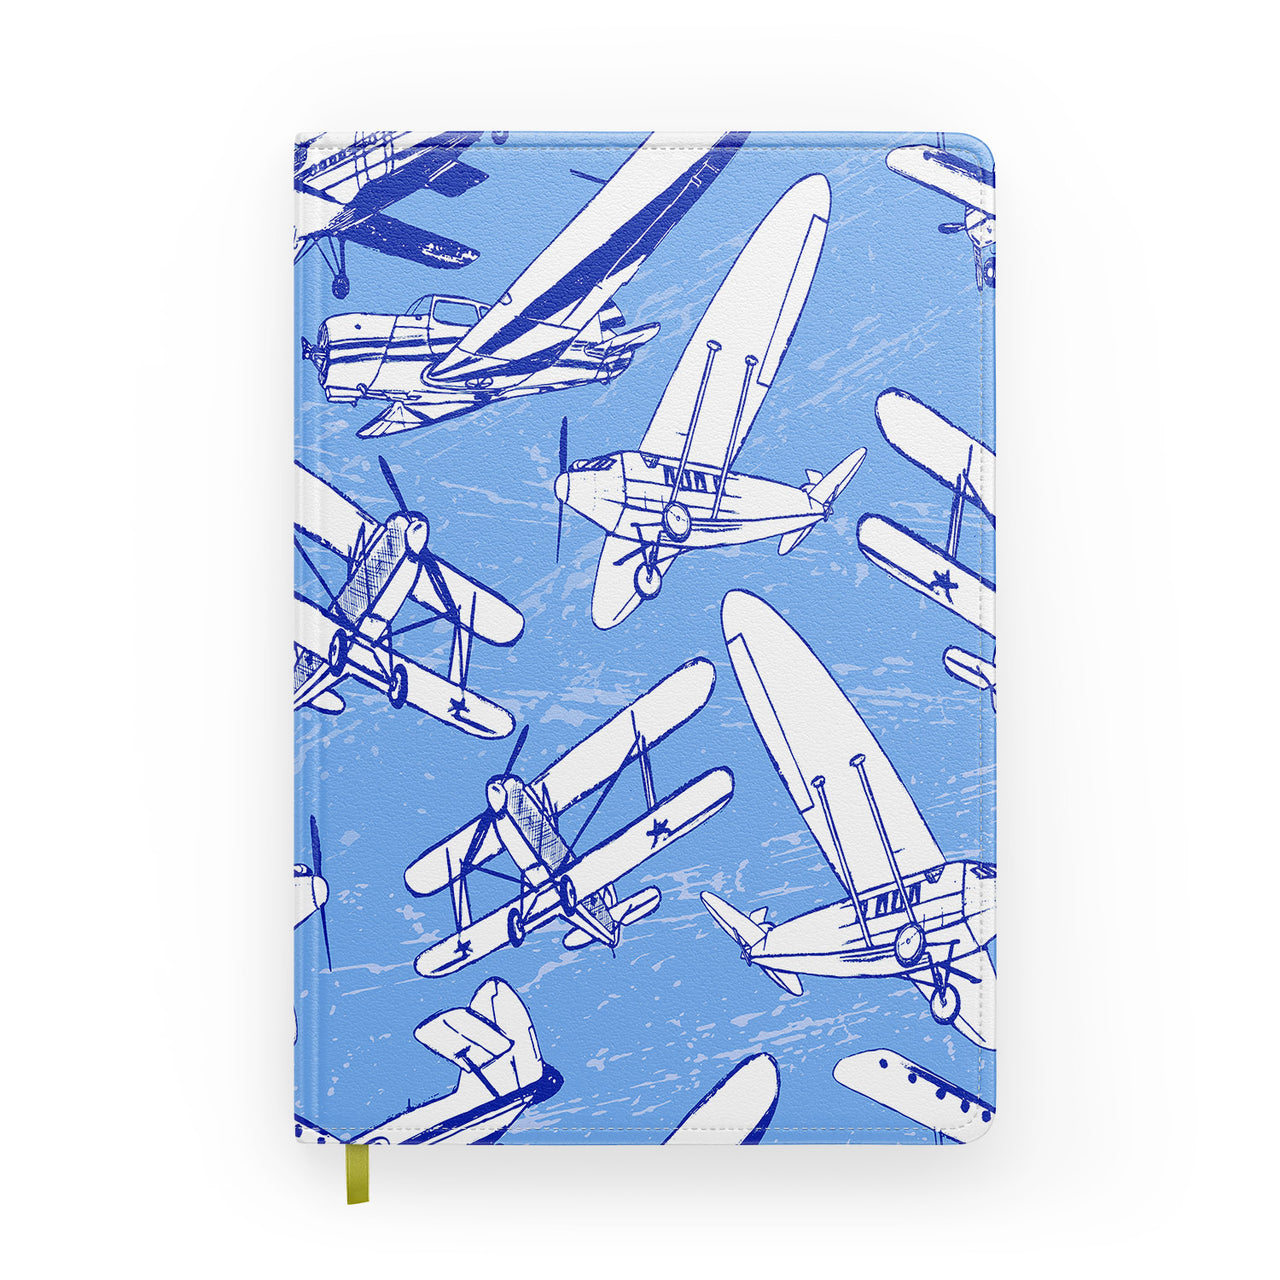 Retro & Vintage Airplanes Designed Notebooks